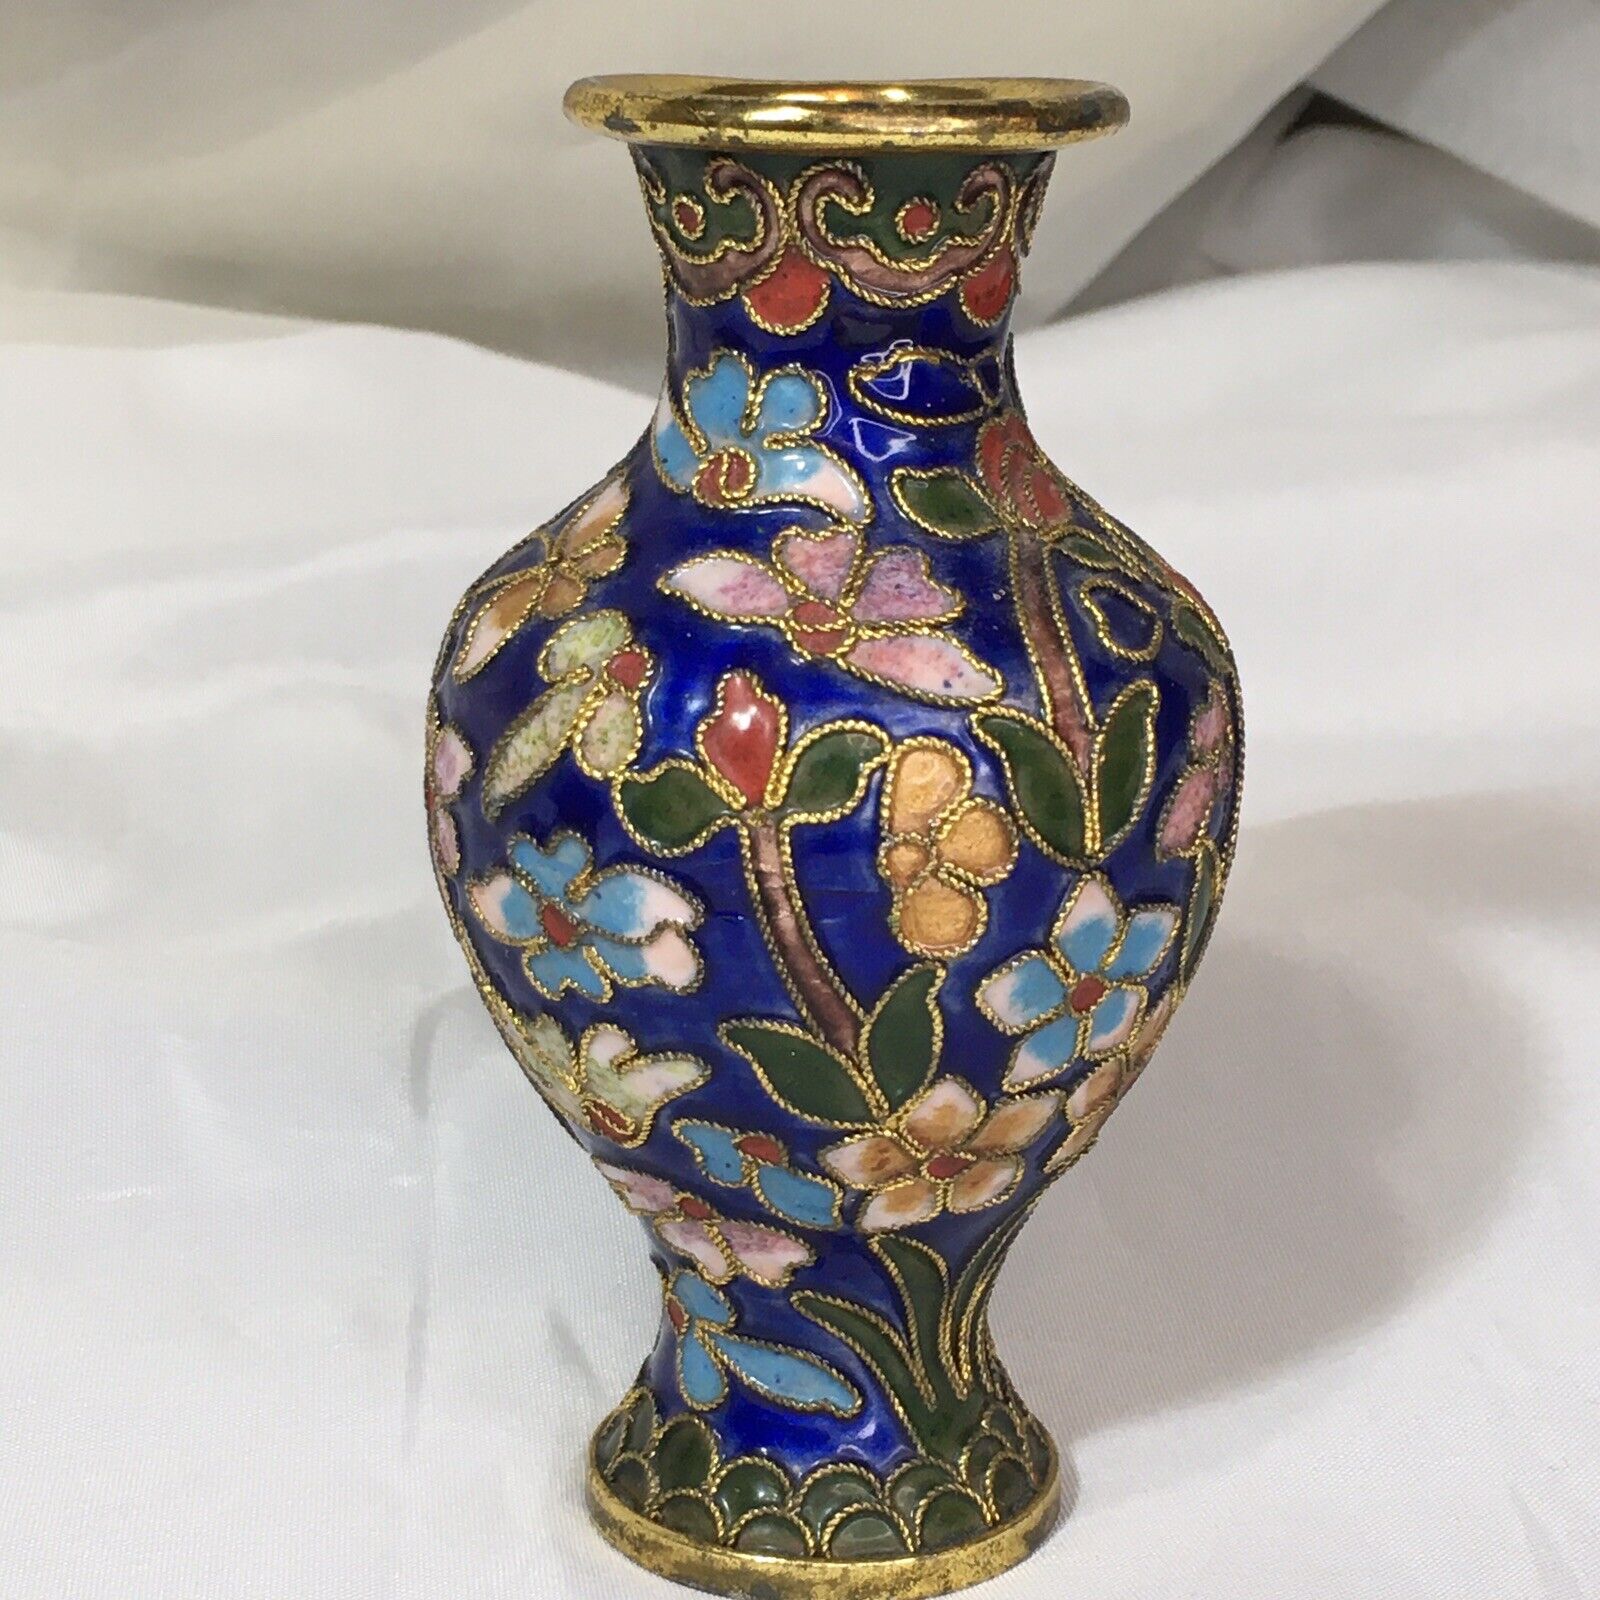 4.25” Vintage Blue Cloisonné Accent Vase With Pink Flowers And Gold Trim❤️